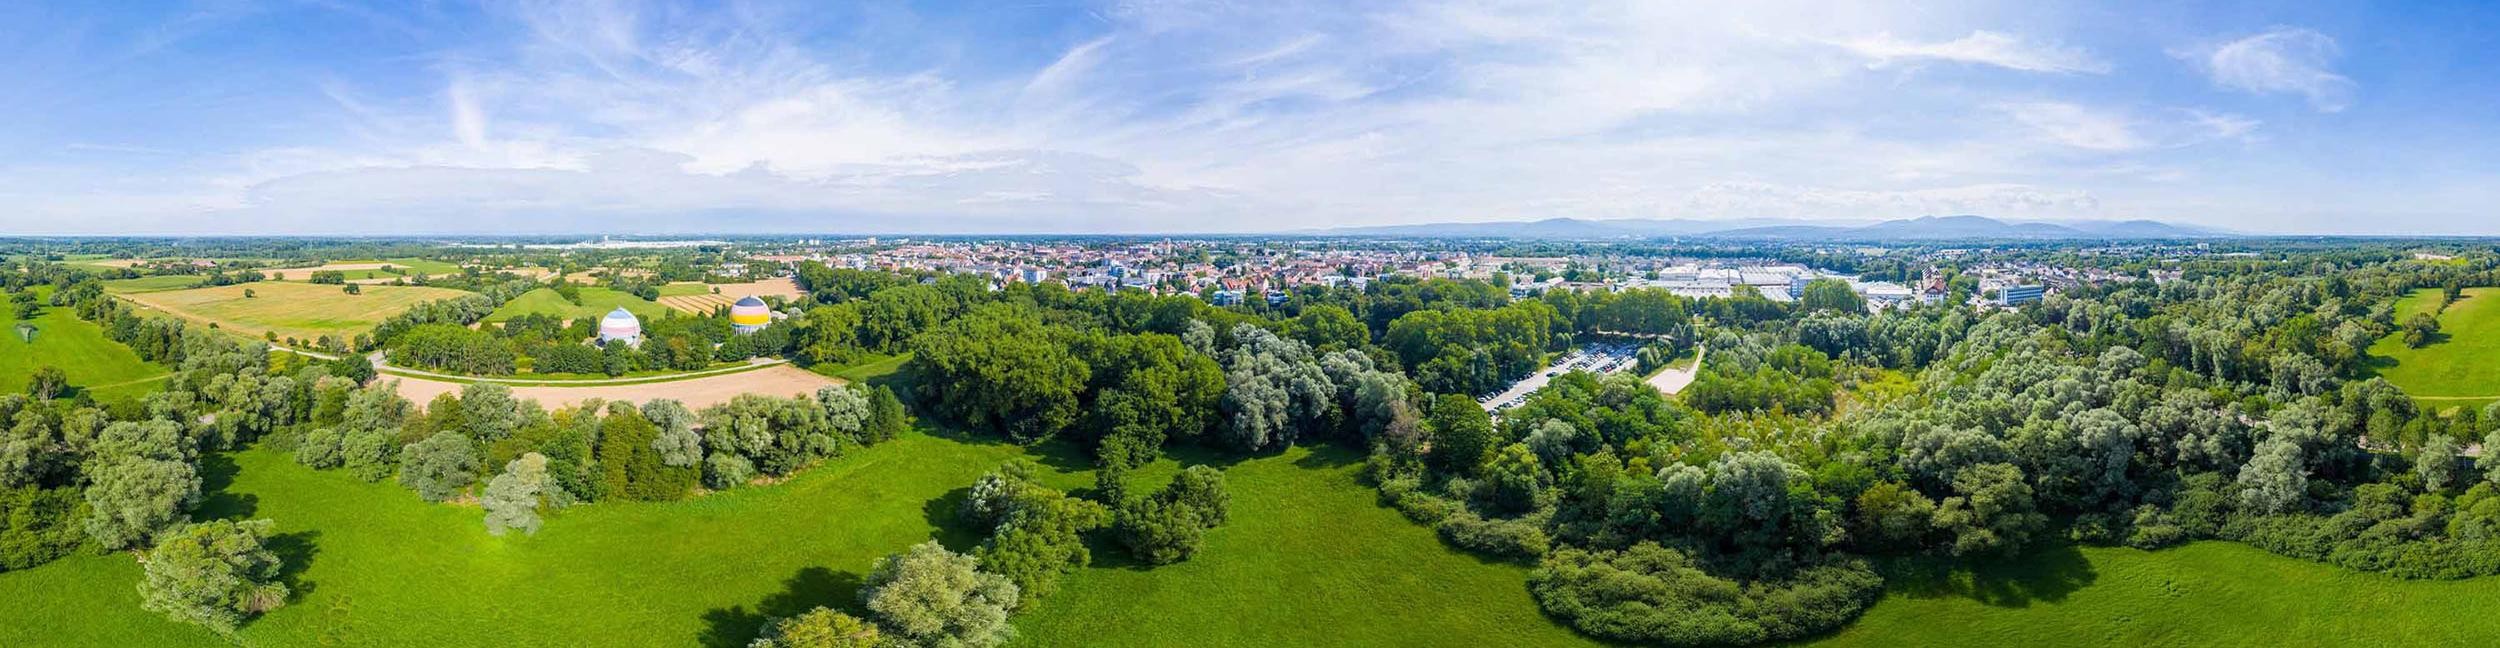 Aerial view of Rastatt